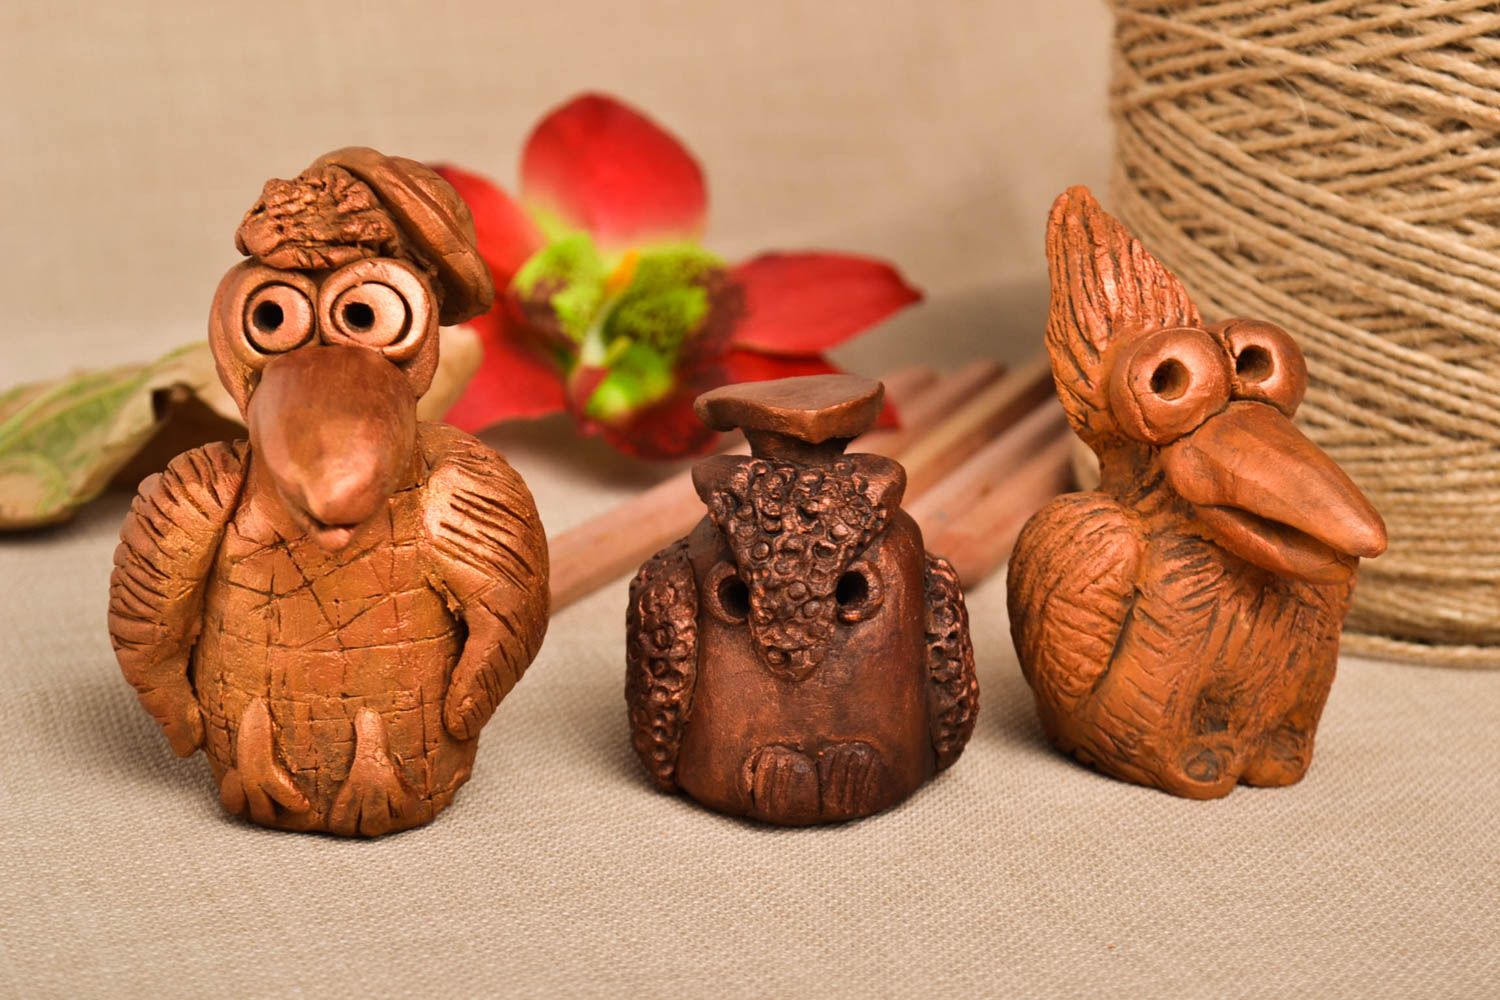 Handmade figurine set of 3 items clay figurine gift ideas decorative use only photo 1